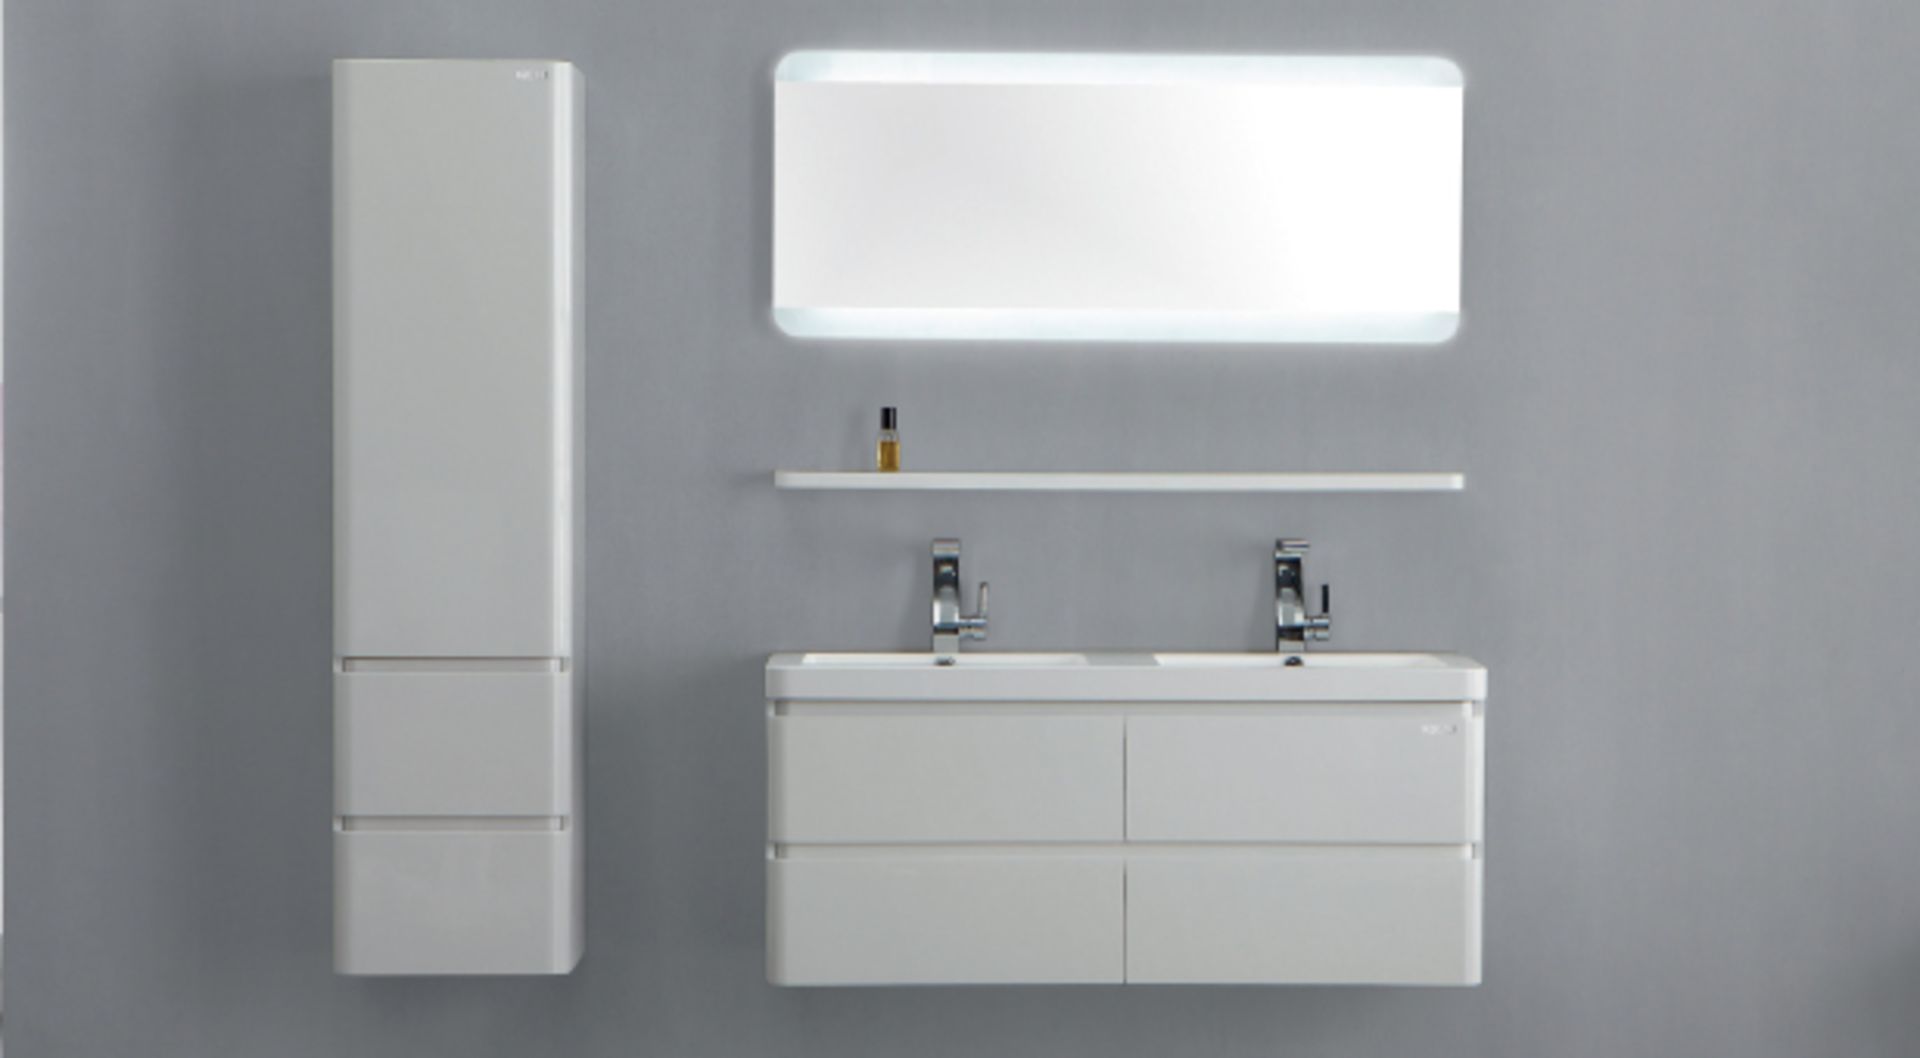 1 x Stylish Bathroom Edge Back-lit Mirror 60